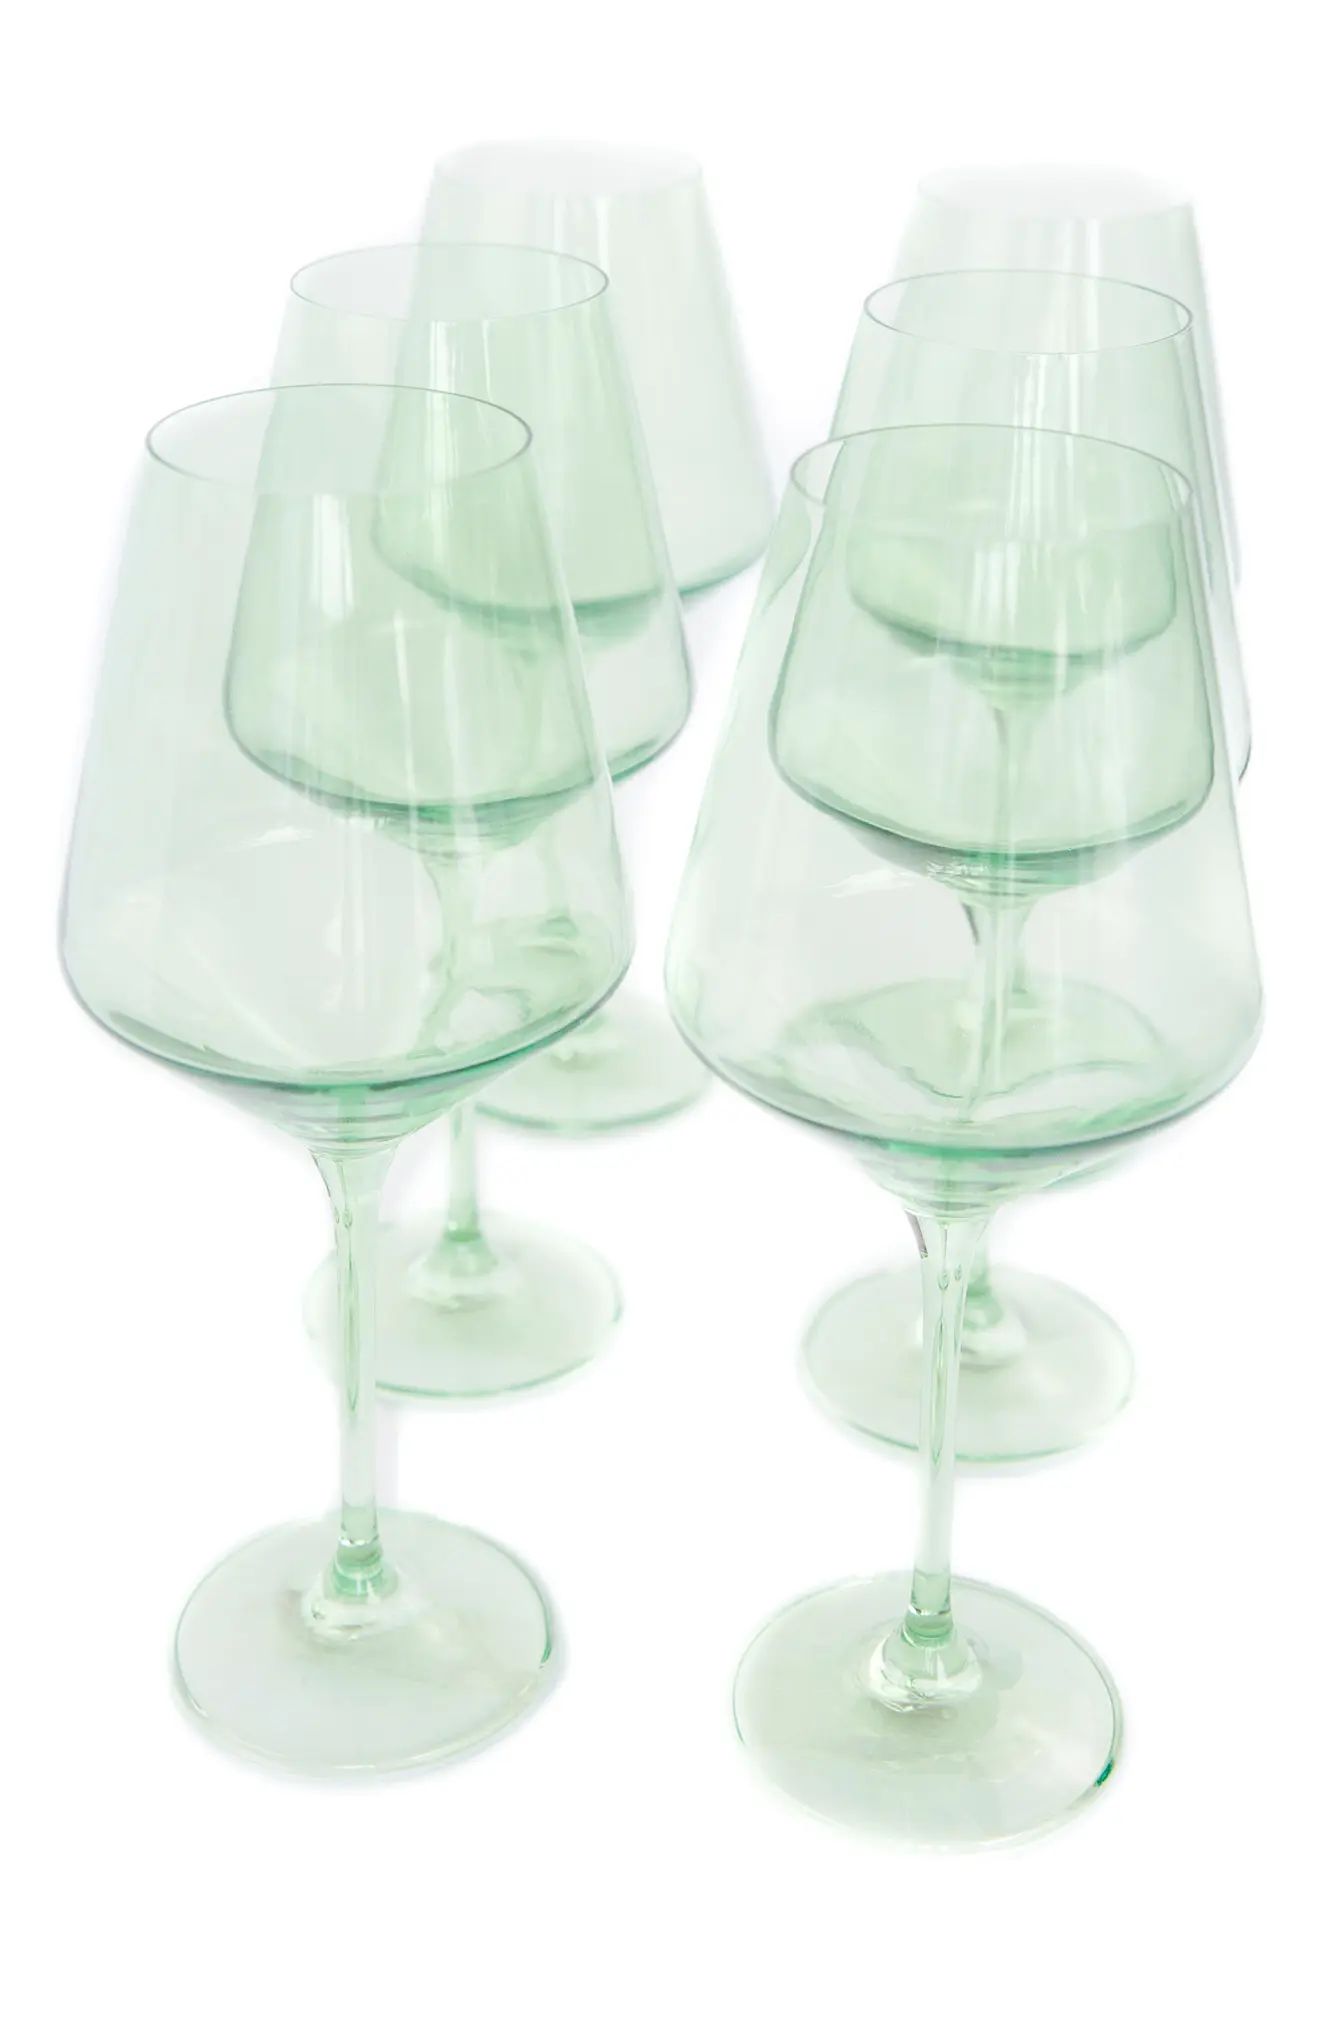 Estelle Colored Glass Set of 6 Stem Wineglasses in Mint Green at Nordstrom | Nordstrom